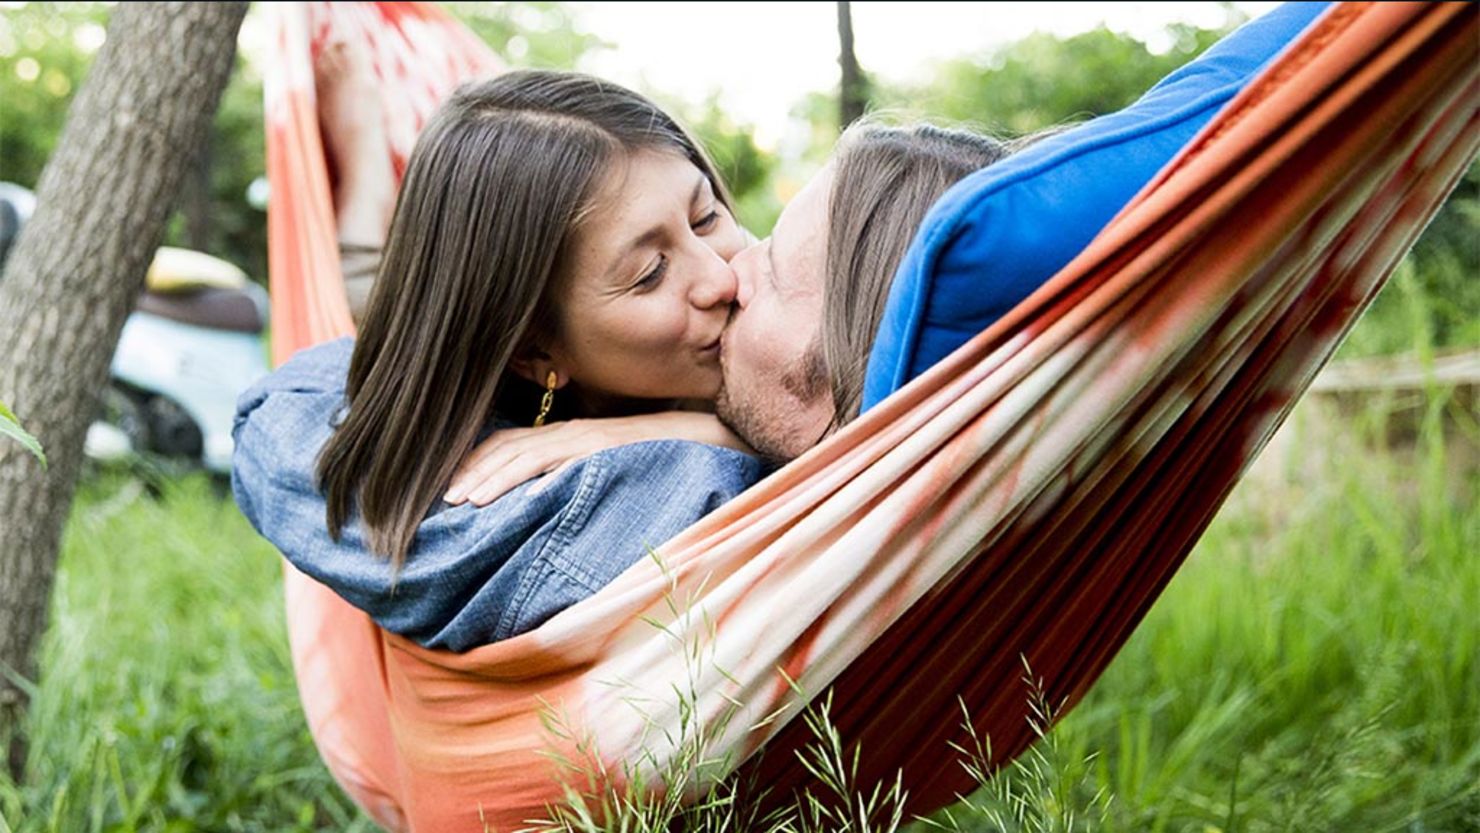 Heppy Kees Xxx - 8 health benefits of kissing | CNN